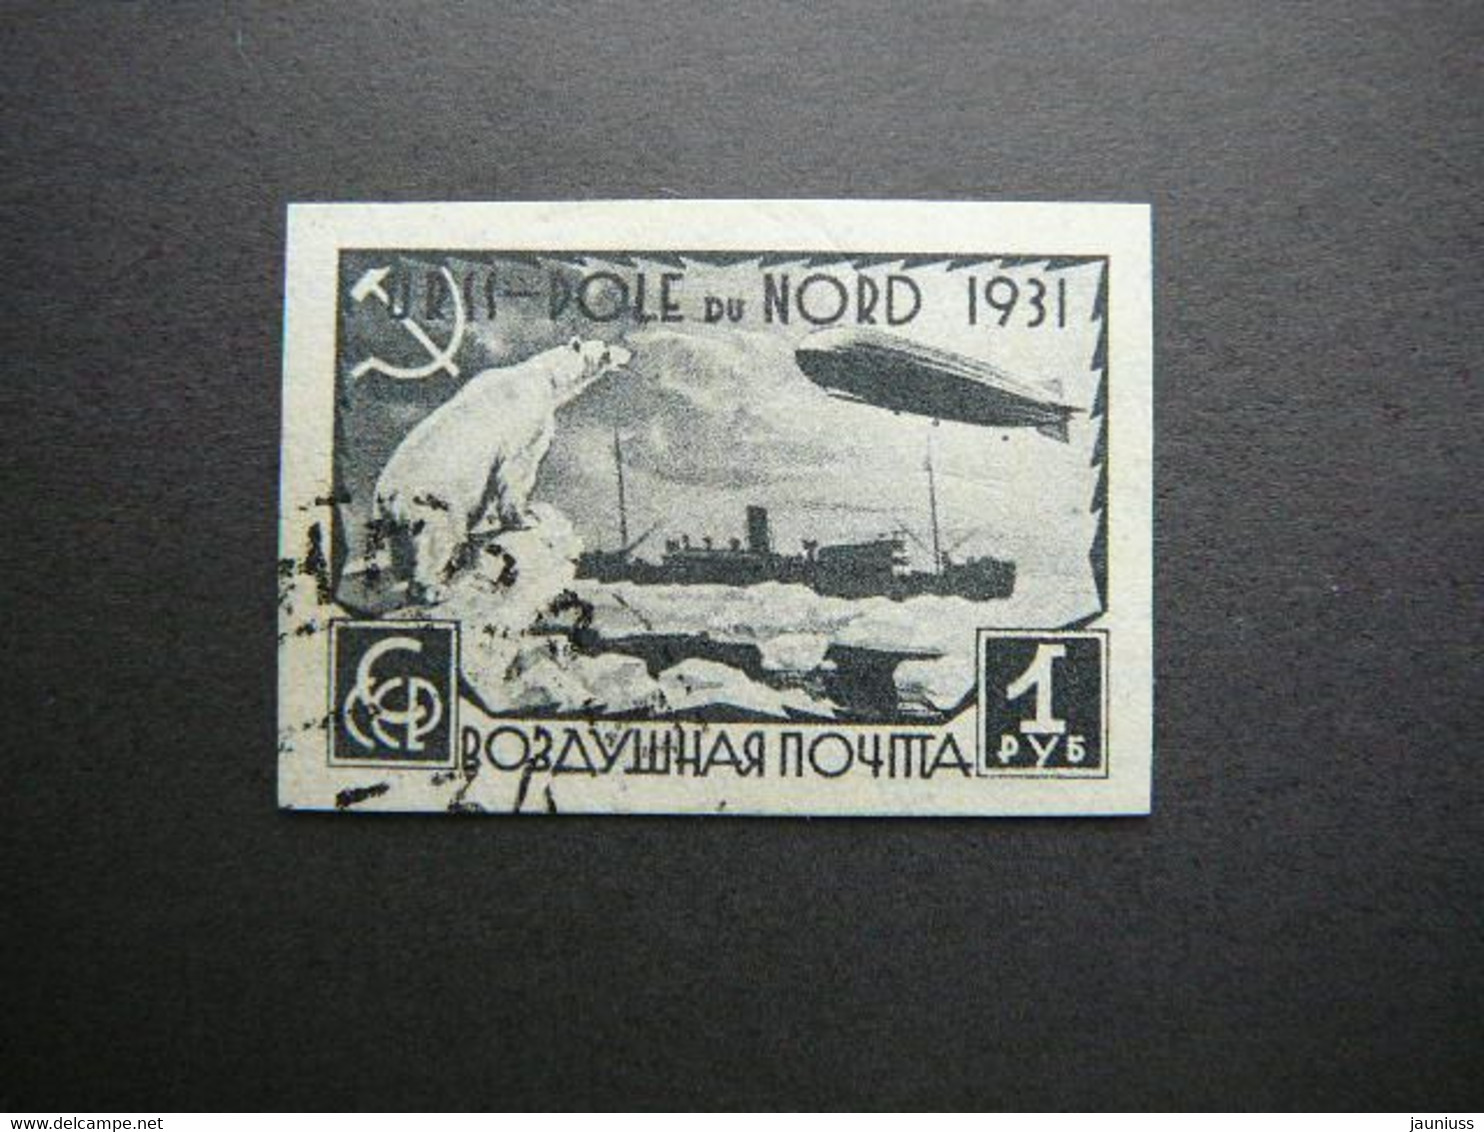 Icebreaker Malygin In Arctic # Russia USSR Sowjetunion # 1931 Used #Mi. 404 B Ships Zeppelin - Used Stamps